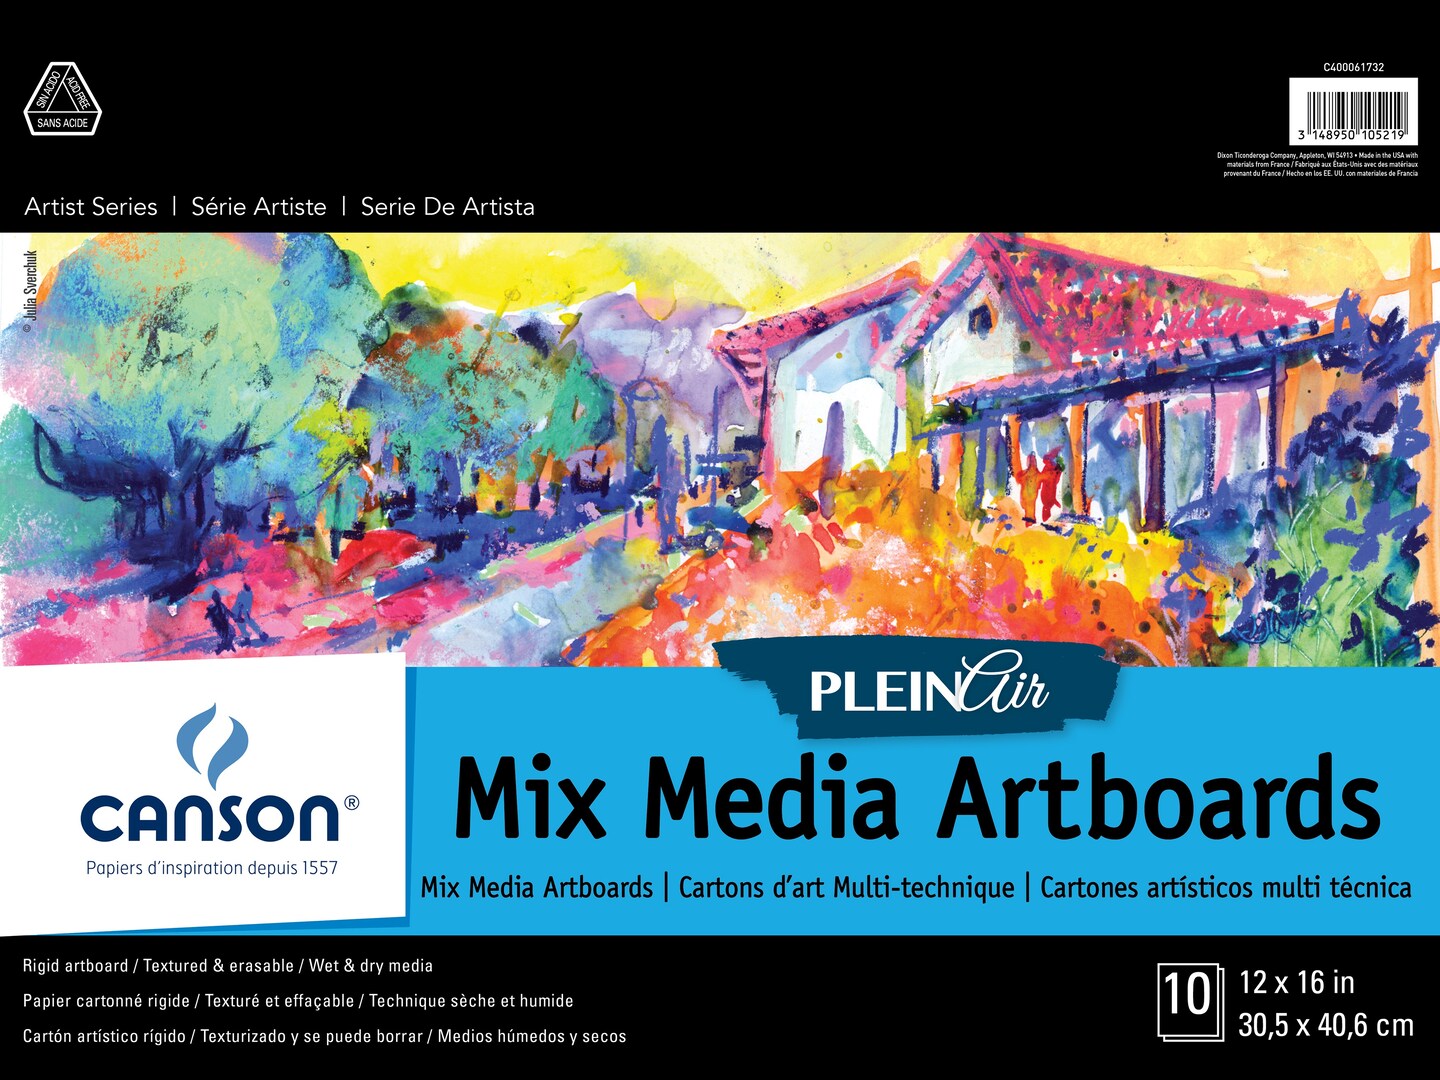 Canson Artist Series Plein Air Mixed Media Artboards 12&#x22;x16&#x22;-10 Boards